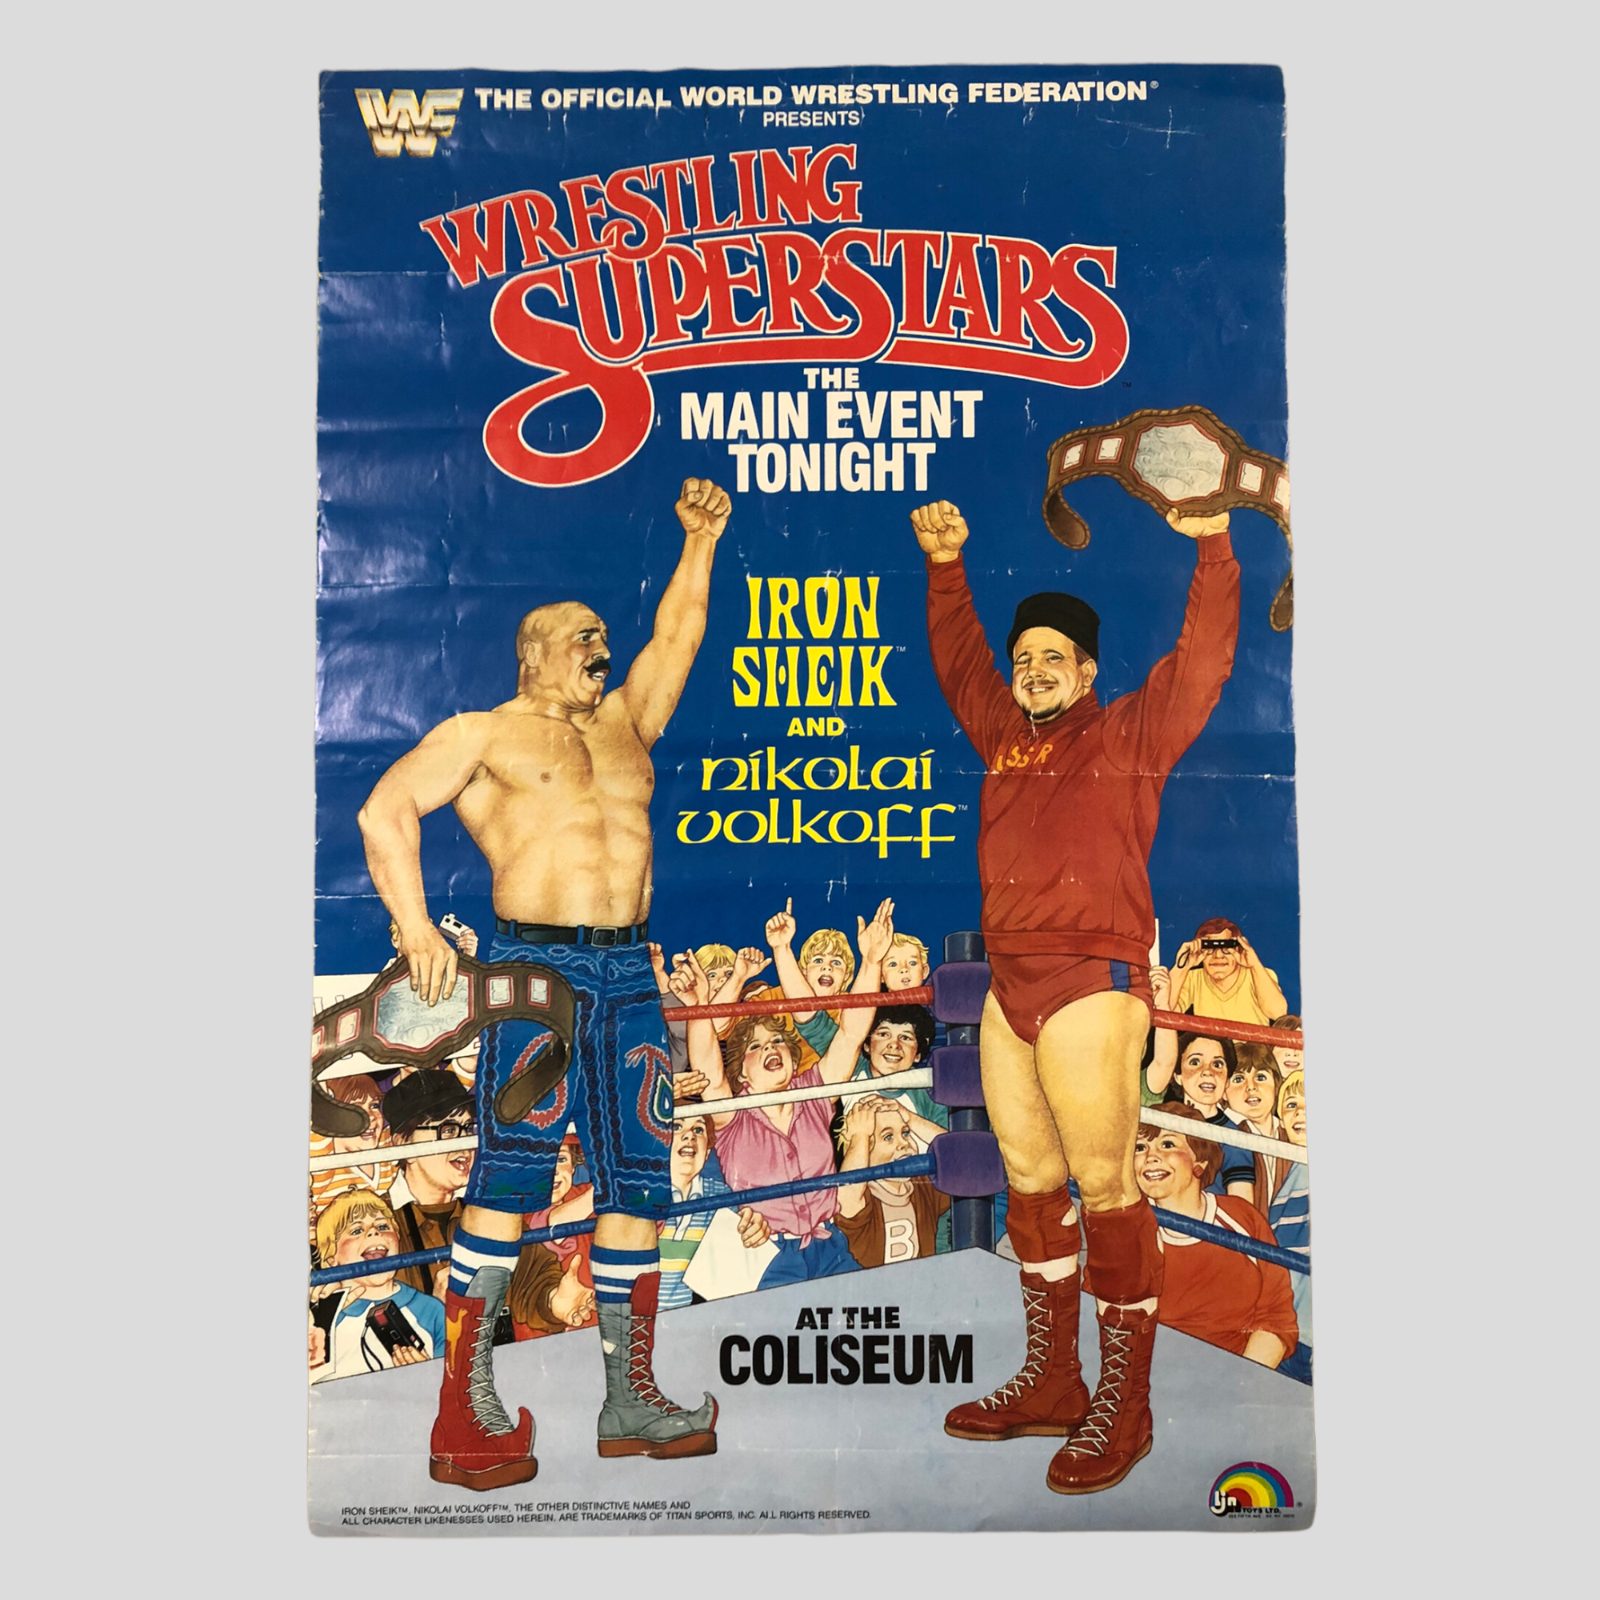 Grand Masters Of Wrestling Vol 2 DVD Nikolai Volkoff Iron Sheik Blassie